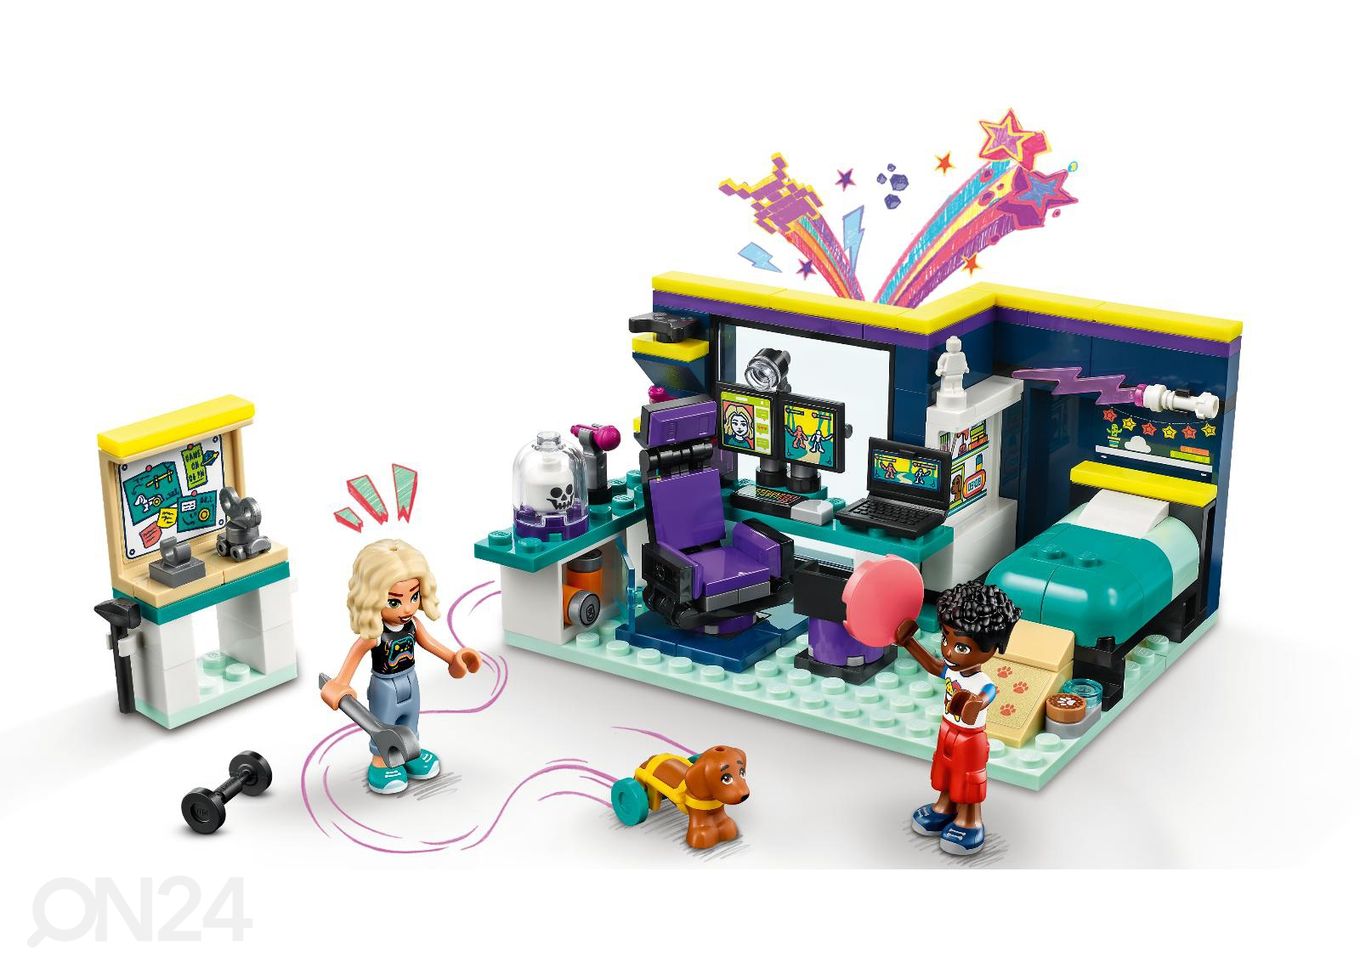 LEGO Friends Nova tuba suurendatud